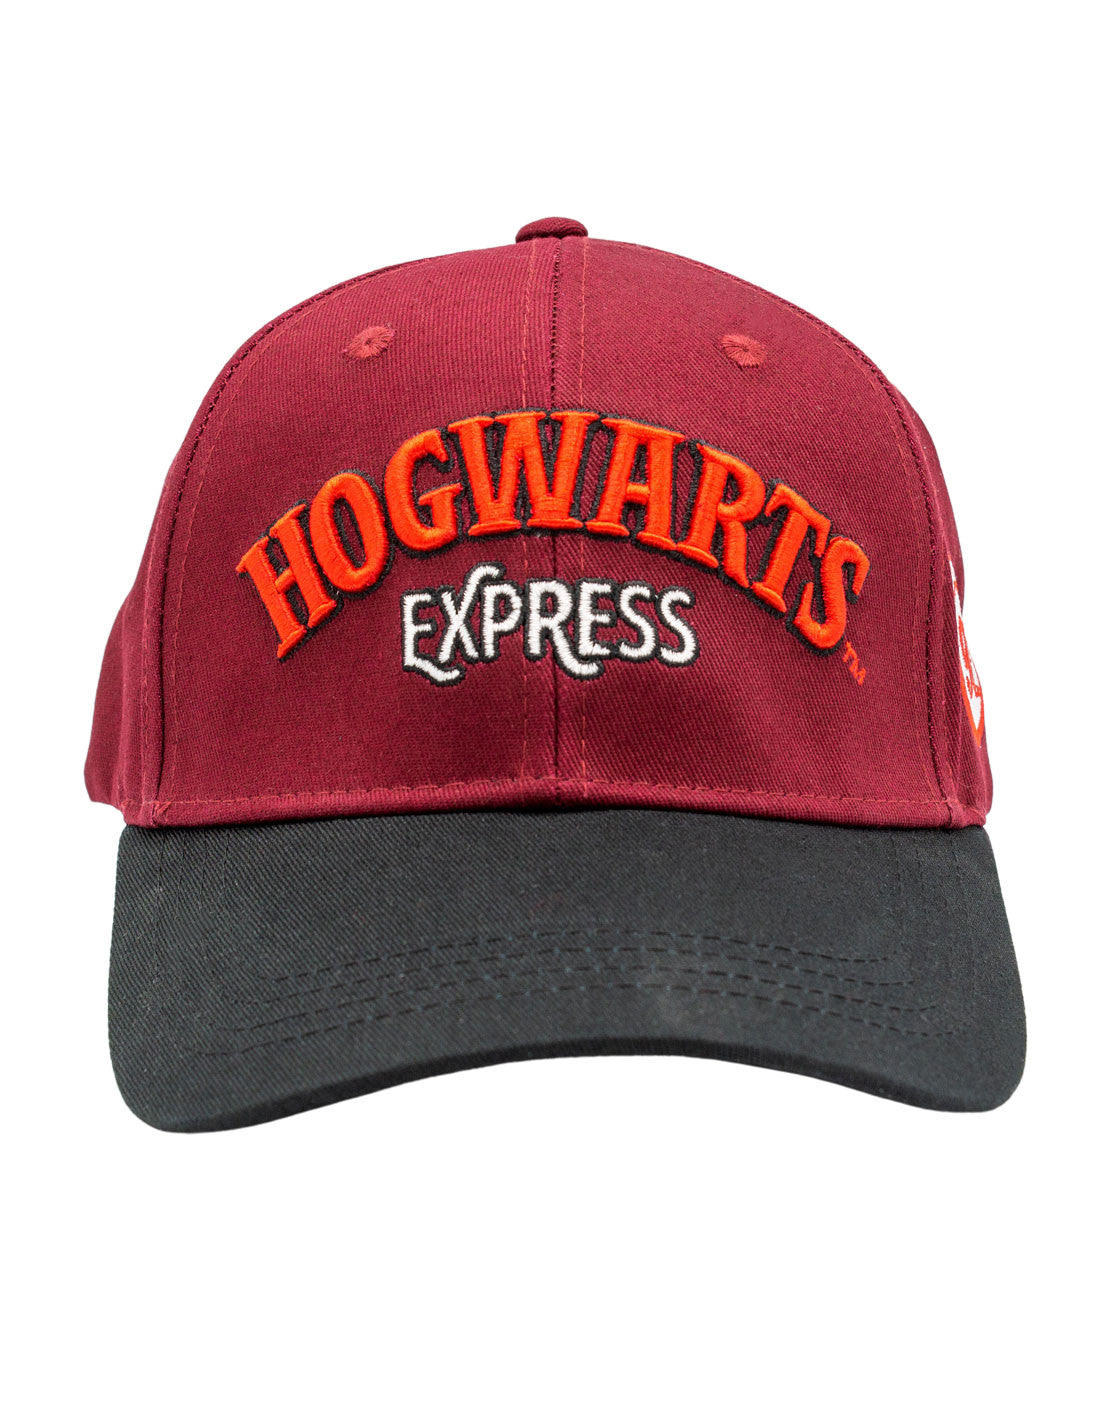 Harry Potter Cap - Hogwarts Express